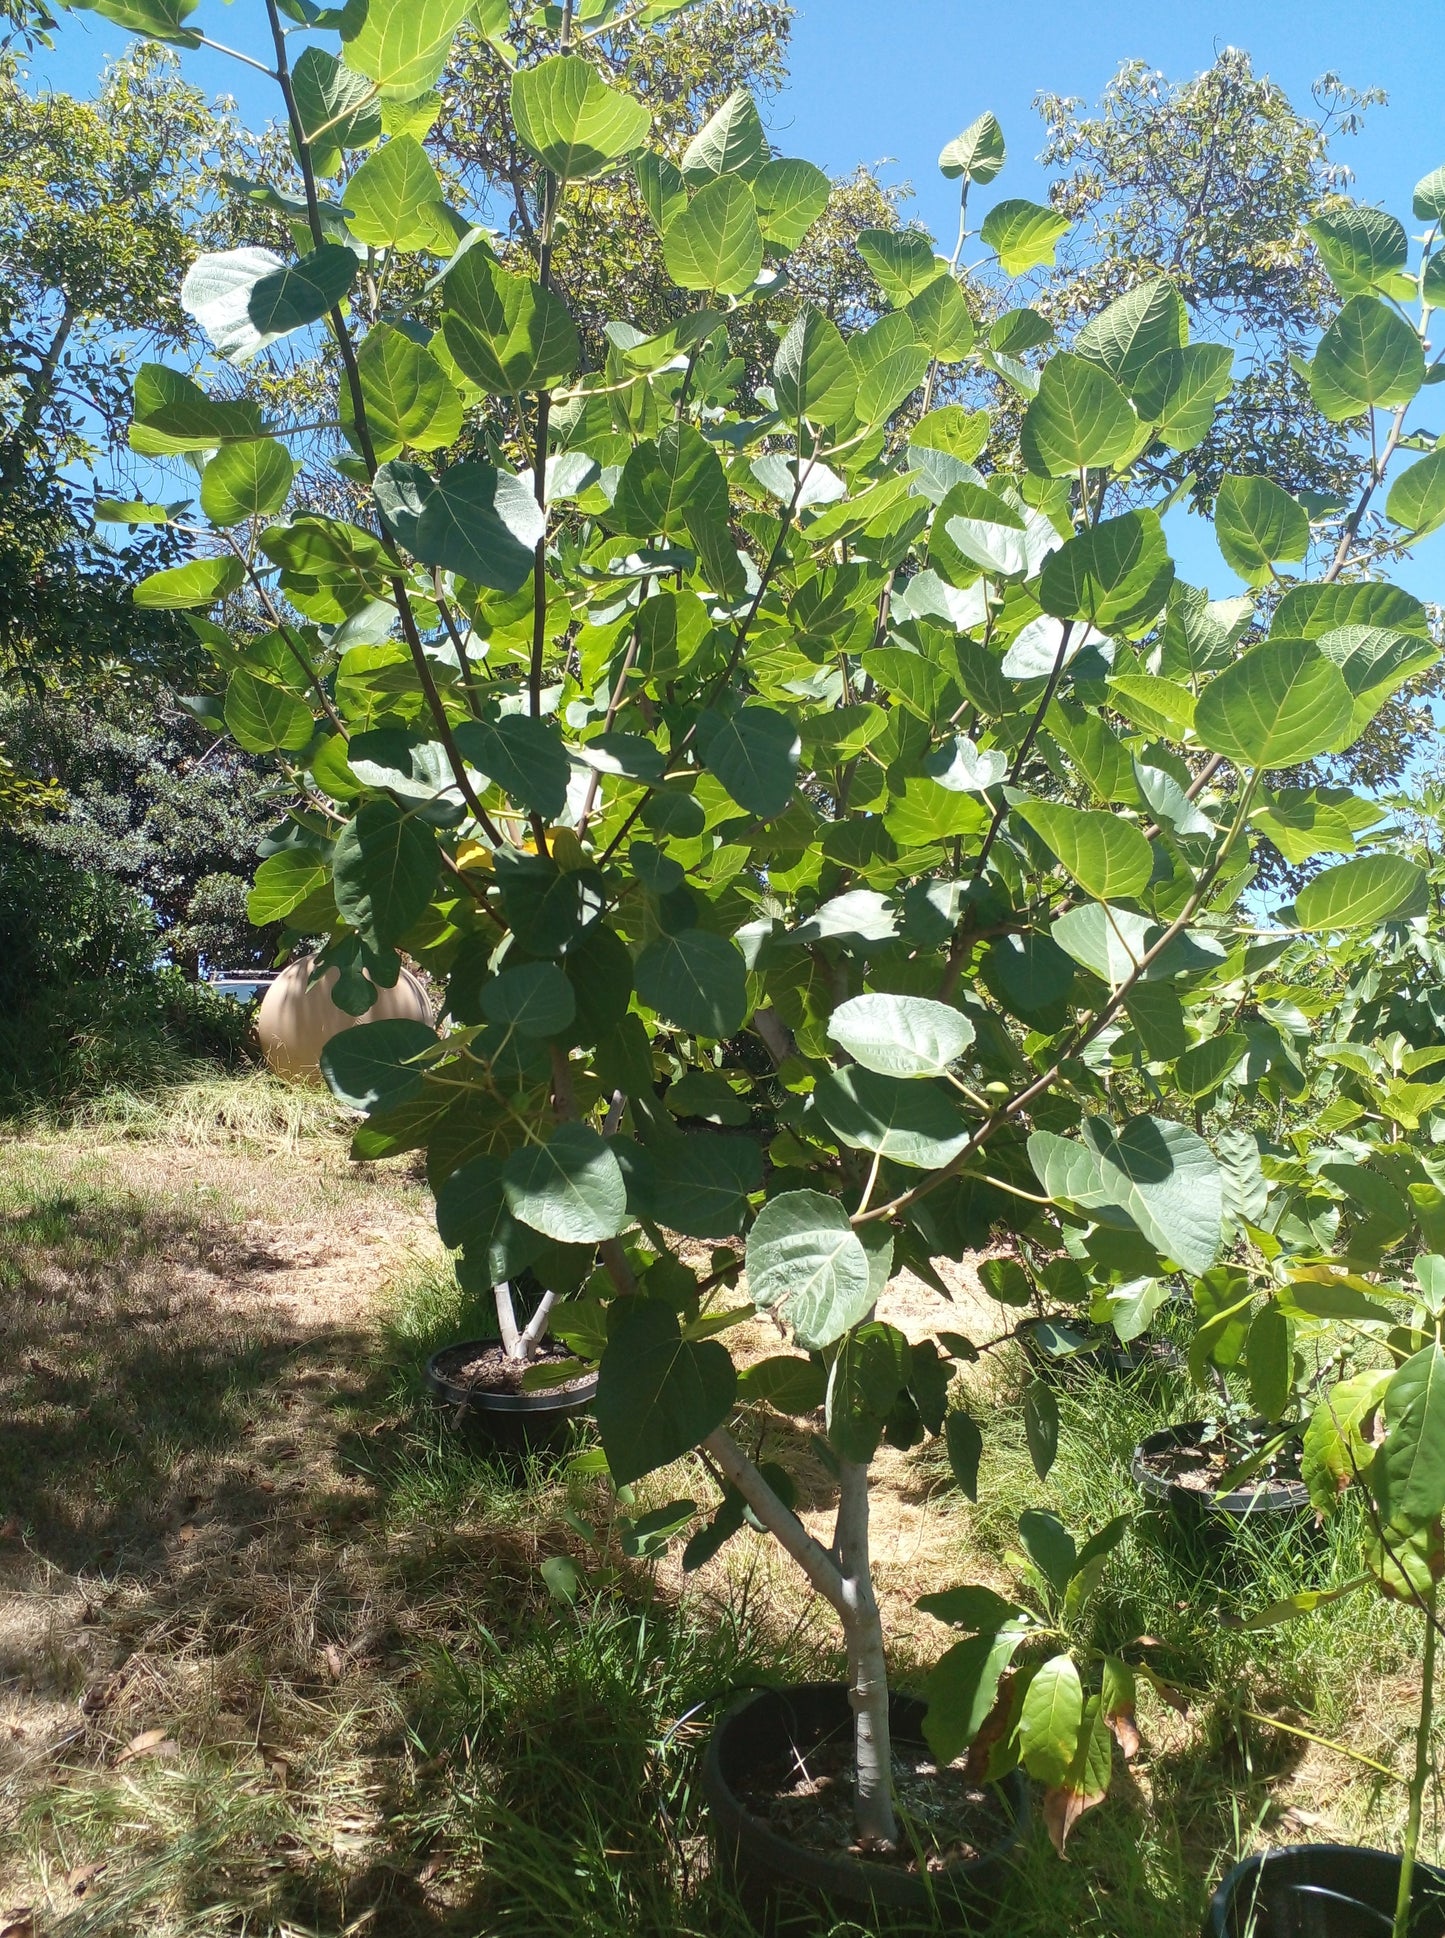 Ficus Palmata N1 Fig Tree - White Punjab Fig - 2 Cuttings - Tasty Unique Berry Flavor